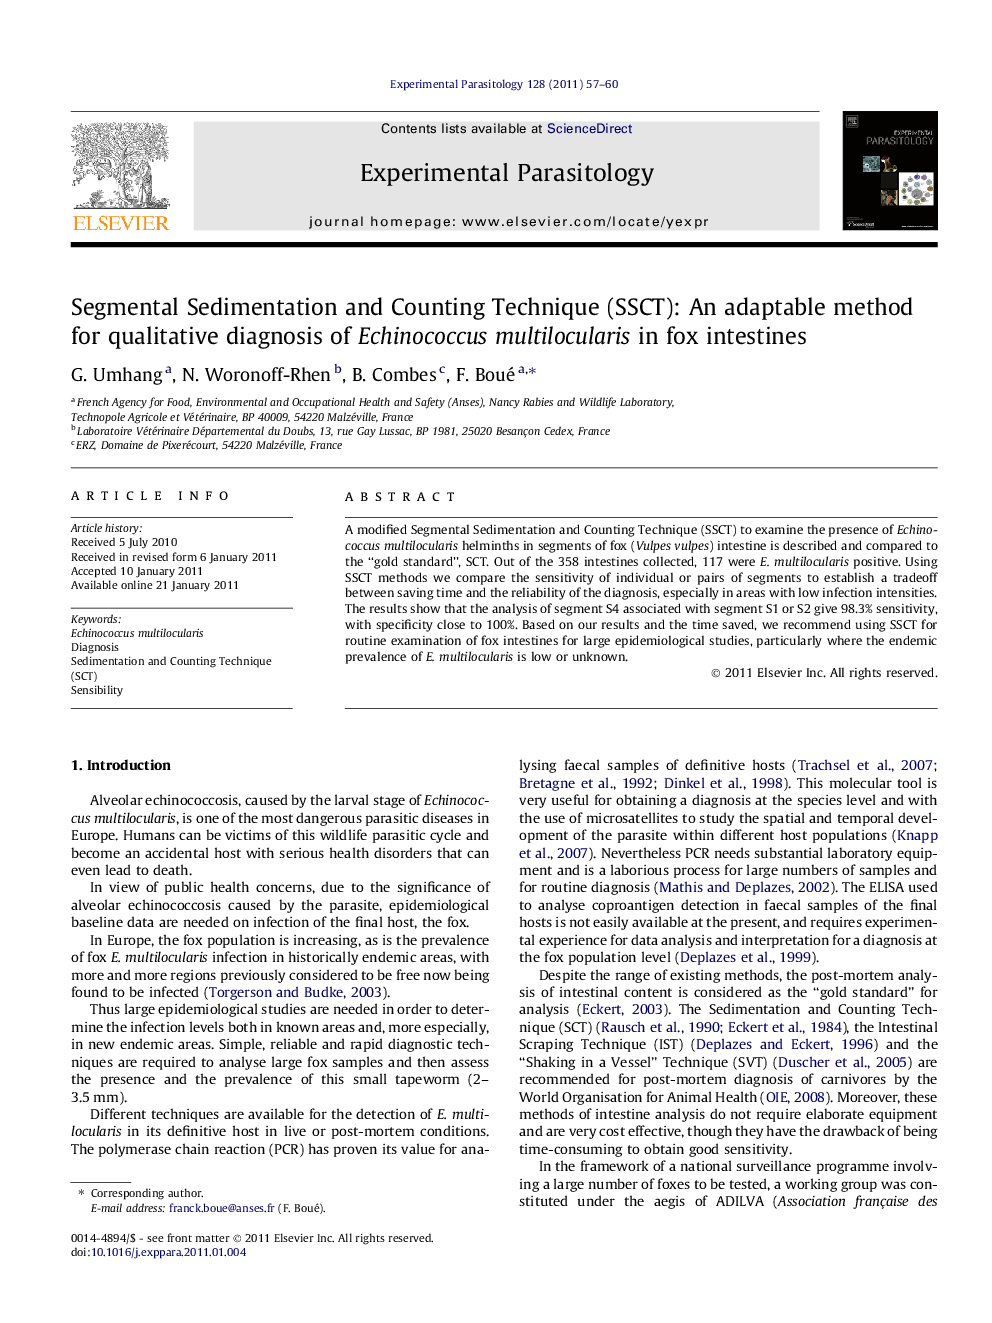 Segmental Sedimentation and Counting Technique (SSCT): An adaptable method for qualitative diagnosis of Echinococcus multilocularis in fox intestines